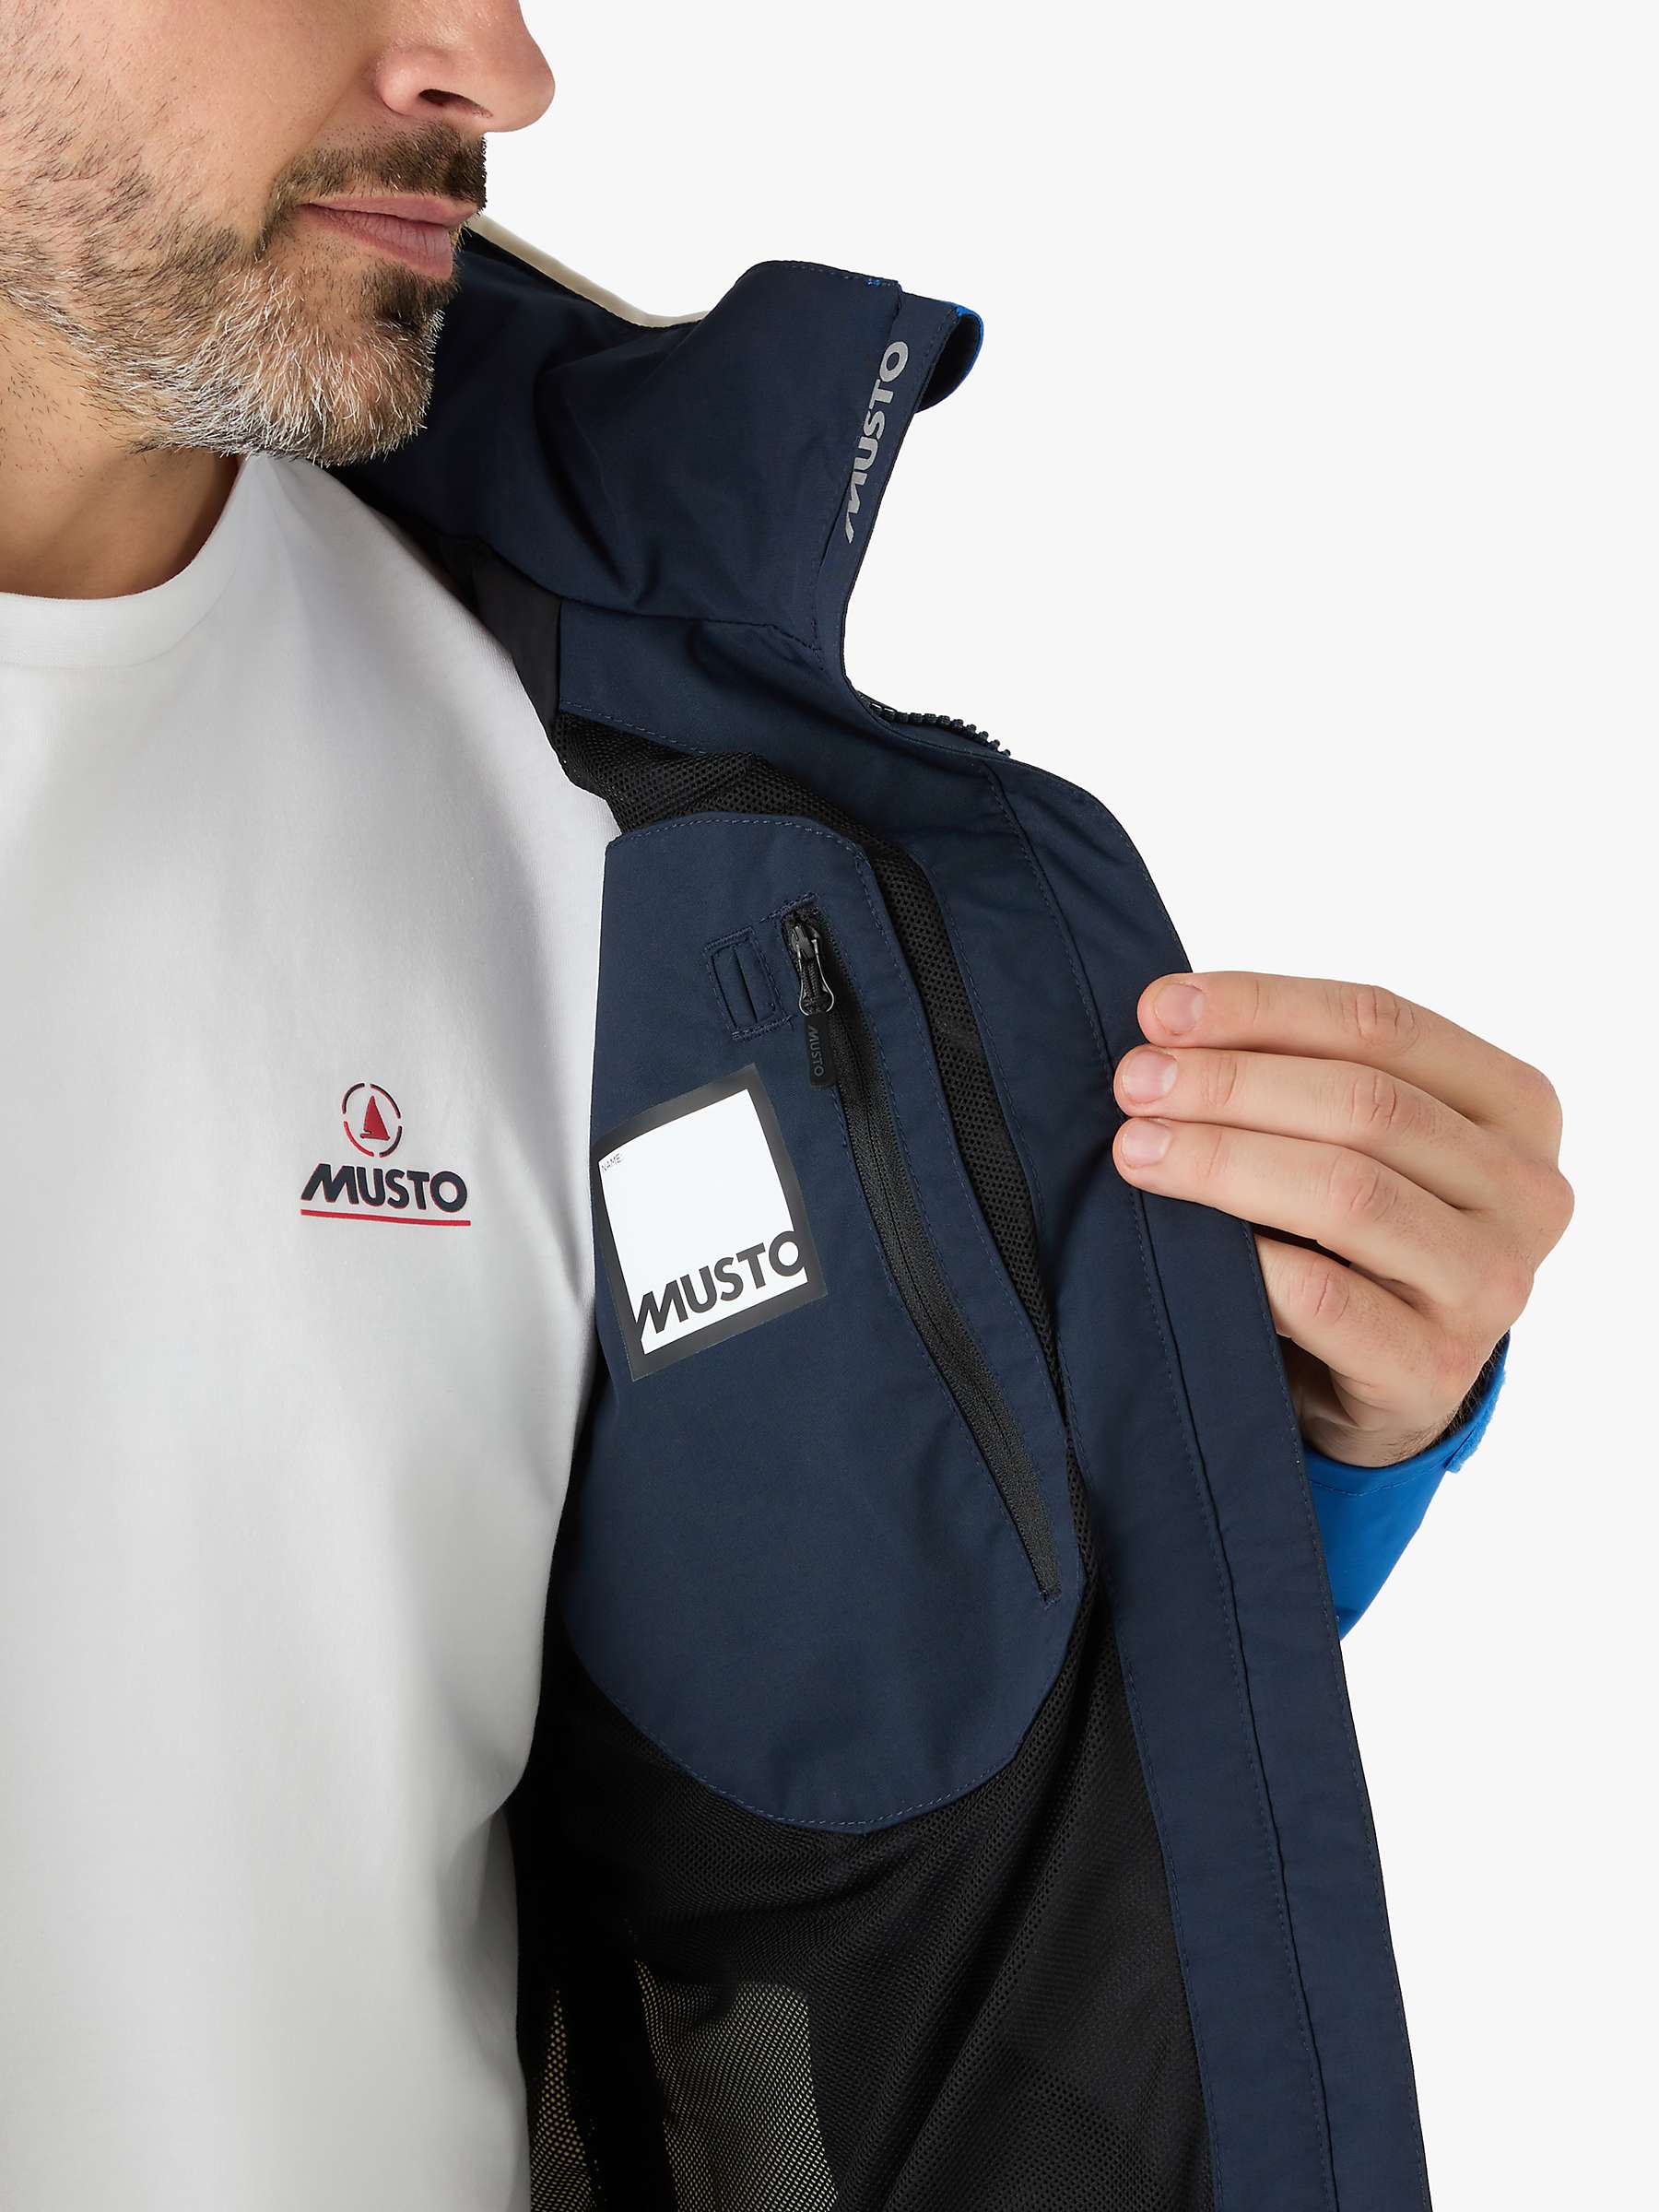 Buy Musto Sardinia BR1 Men's Waterproof Jacket, Aruba Blue/Navy Online at johnlewis.com